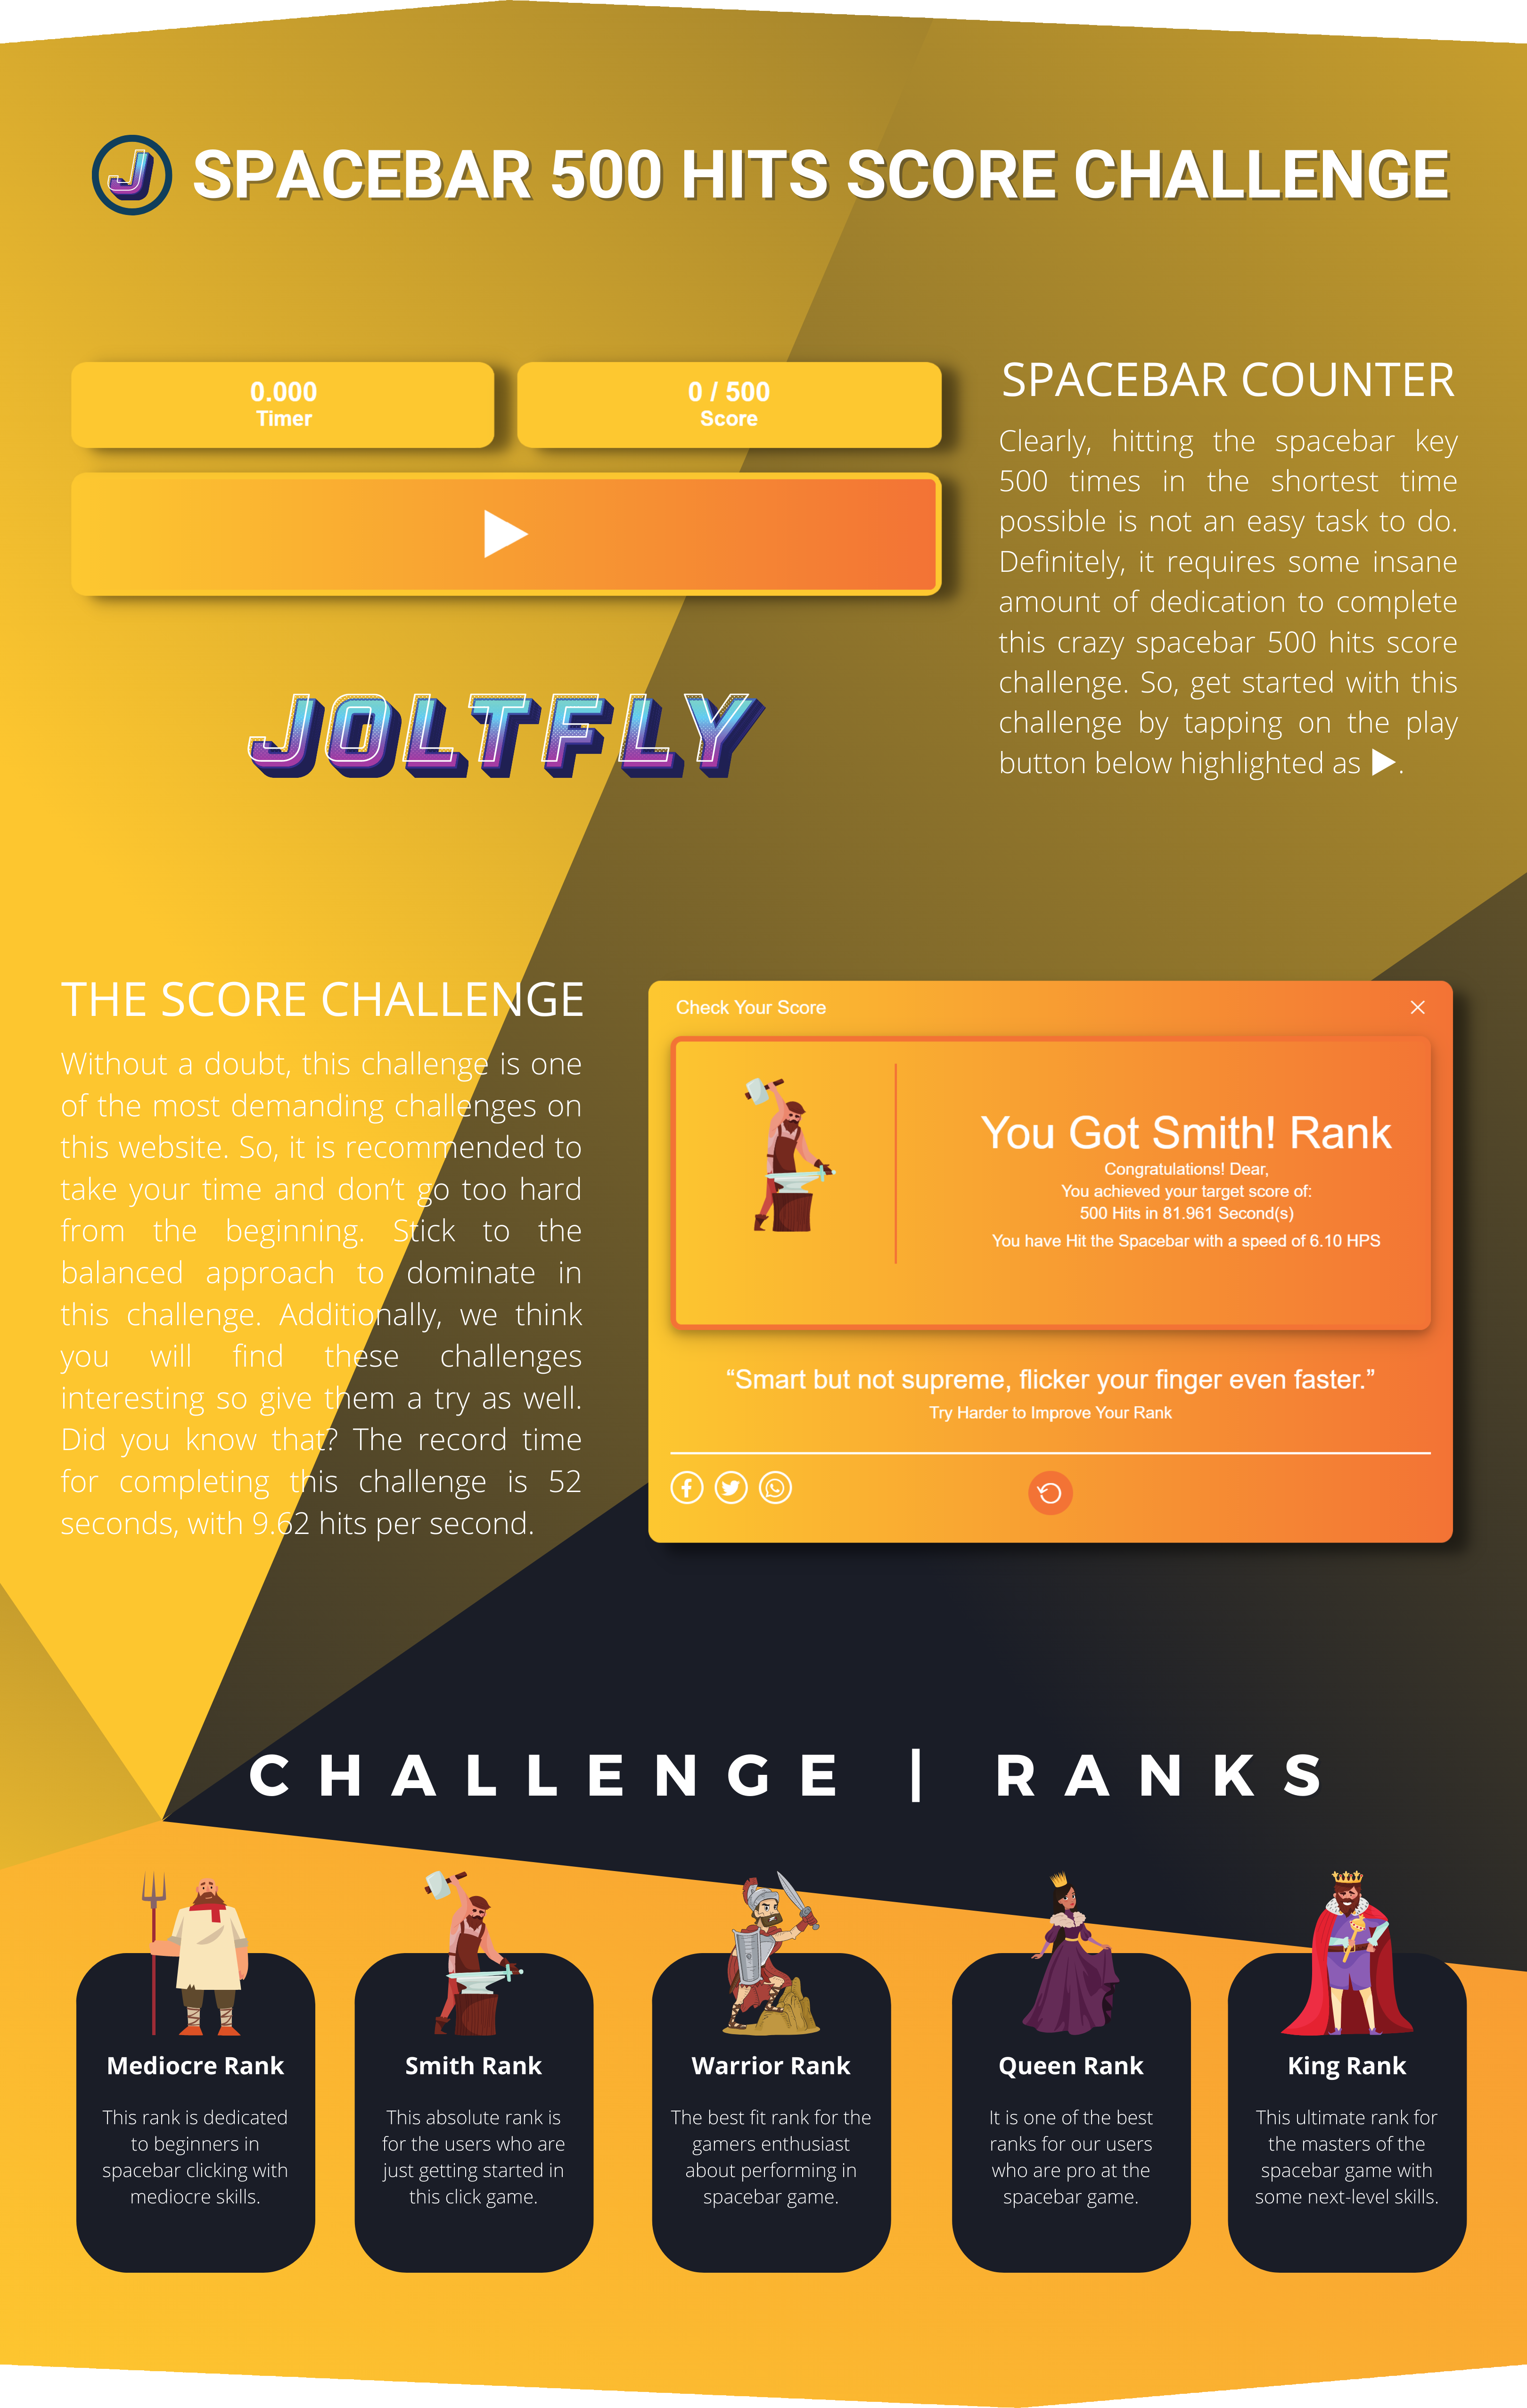 Spacebar 1000 Hits Score Challenge - Joltfly